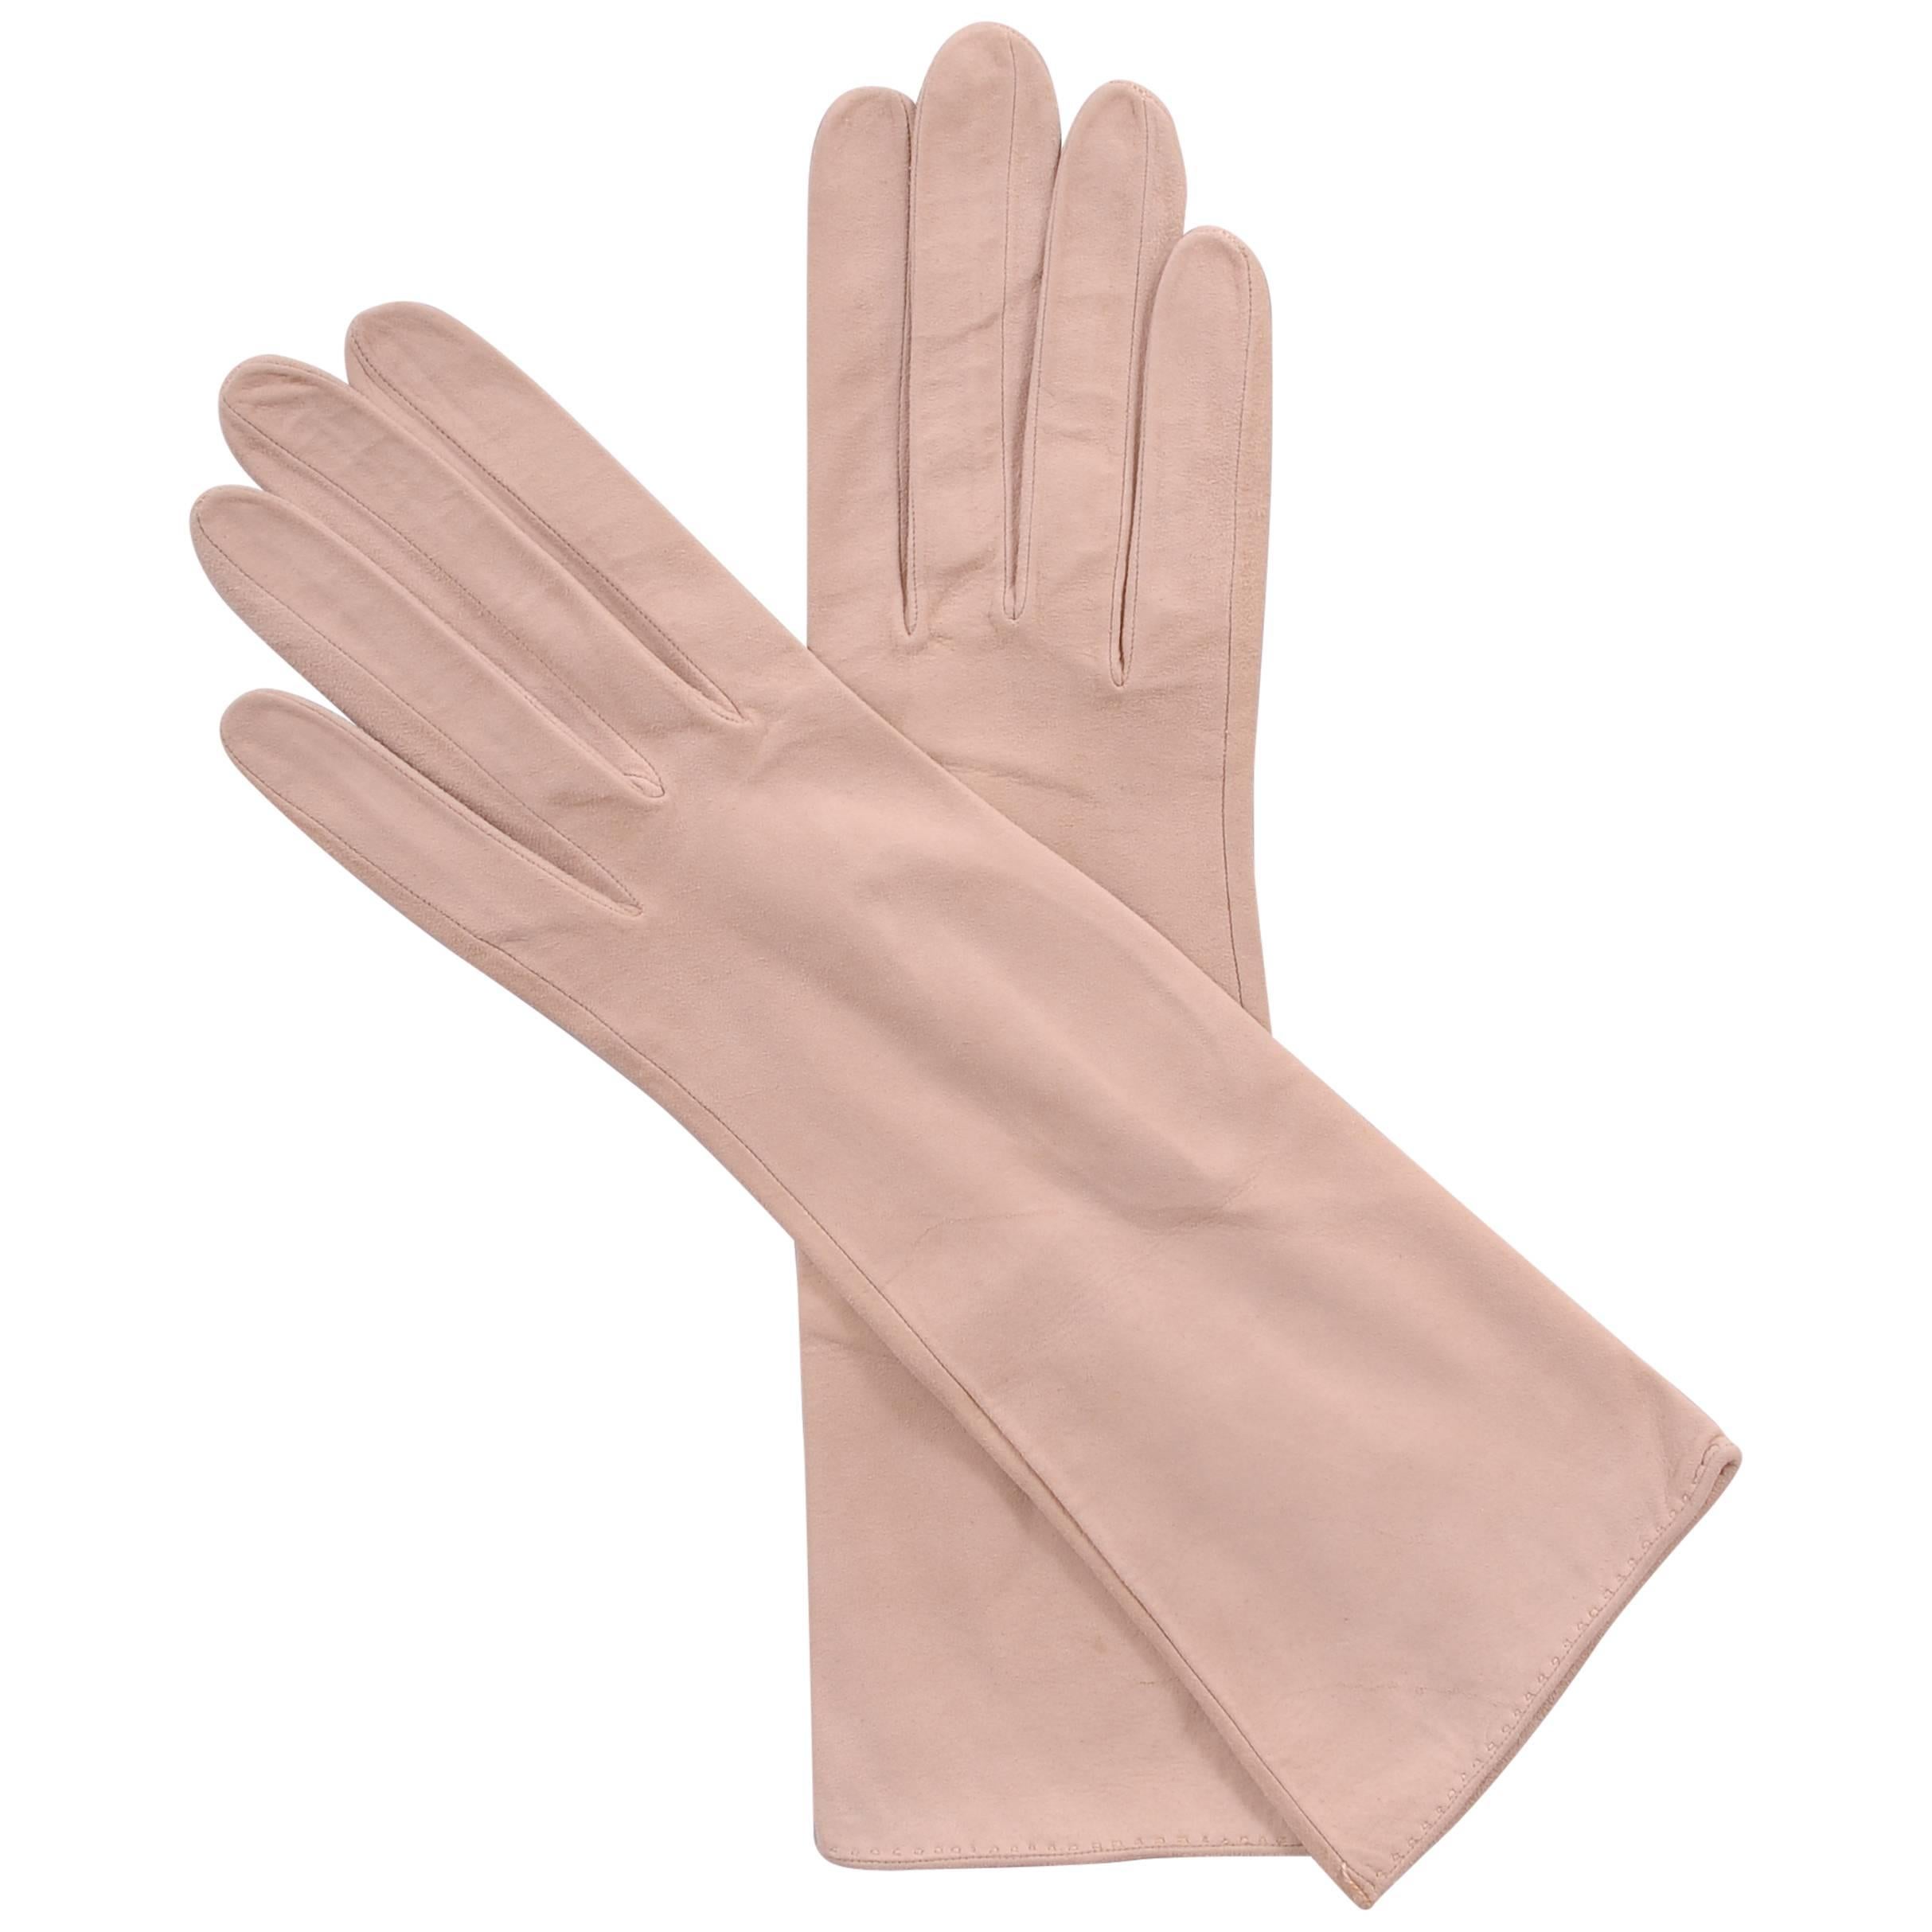 Hermes Suede Gloves Never Worn Size 7 1/2